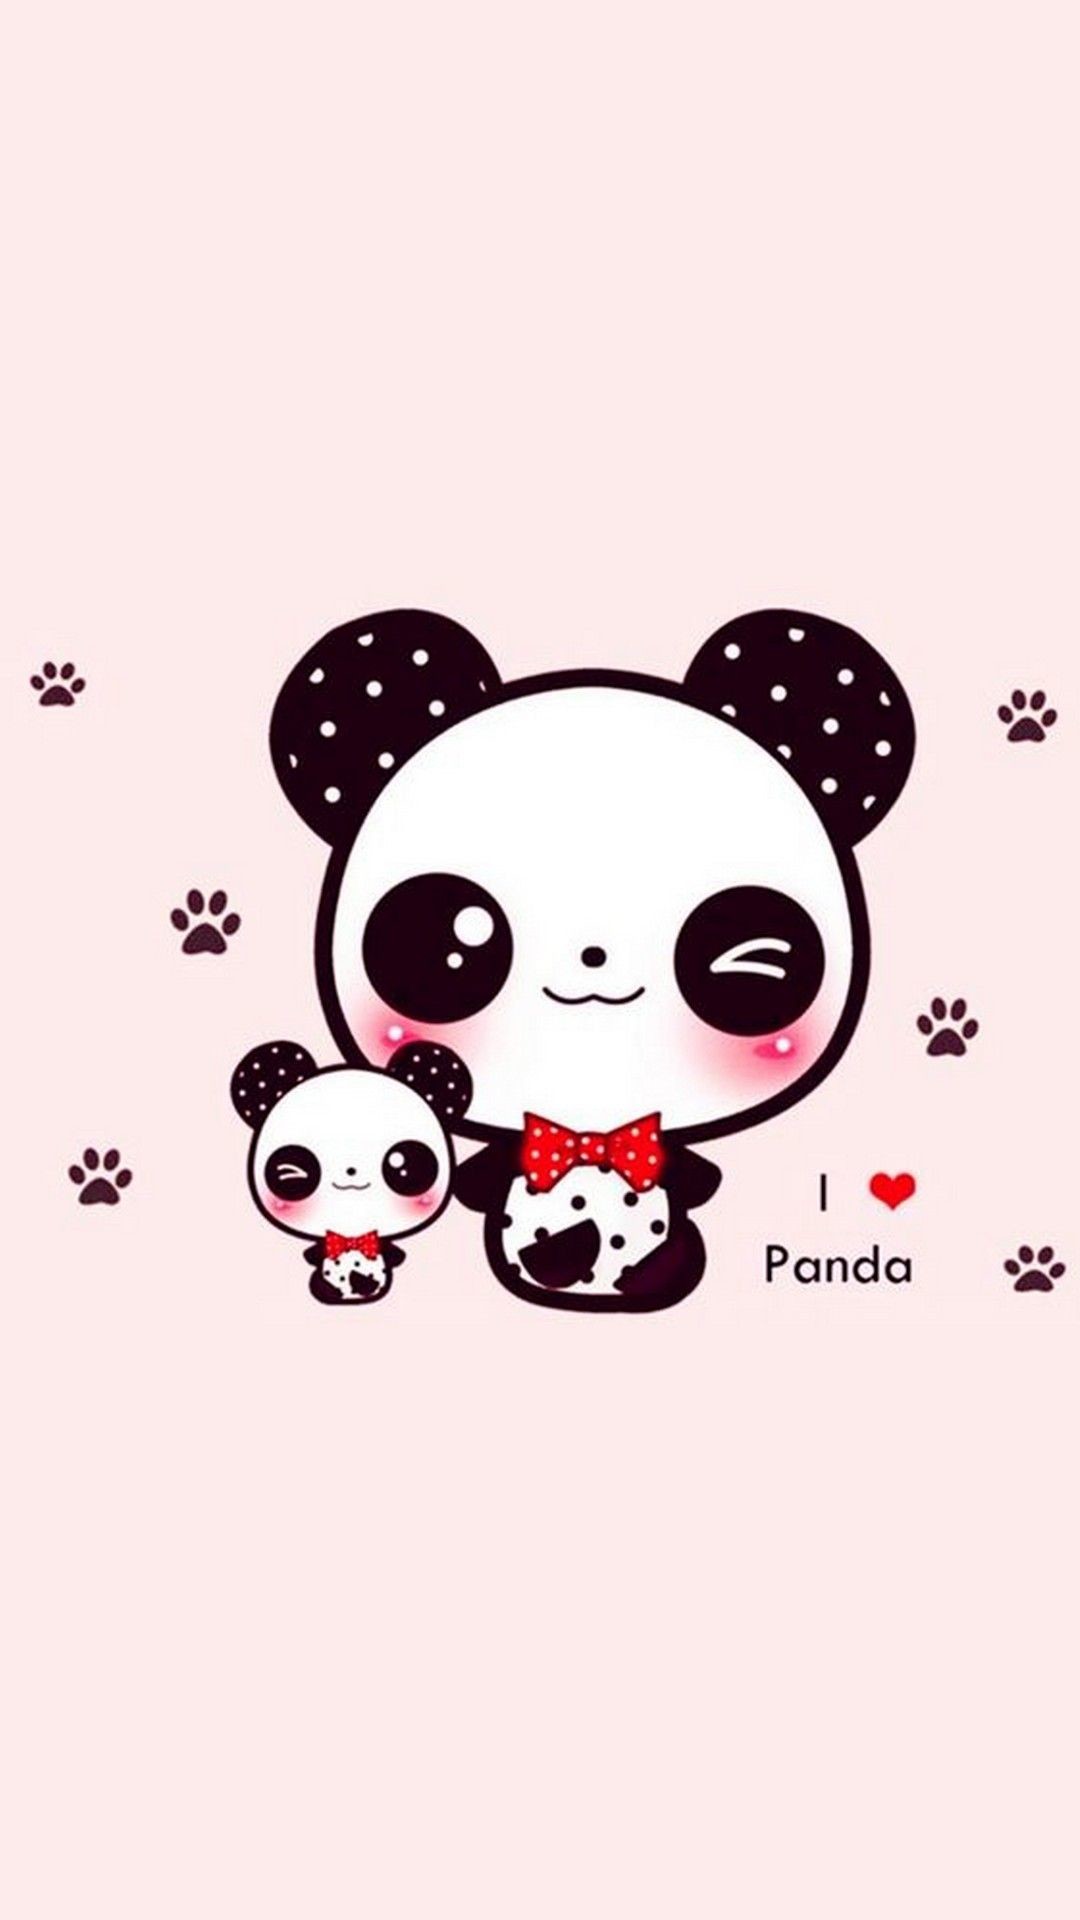 1080x1920 Cute Panda Wallpaper For iPhone - Best iPhone Wallpaper